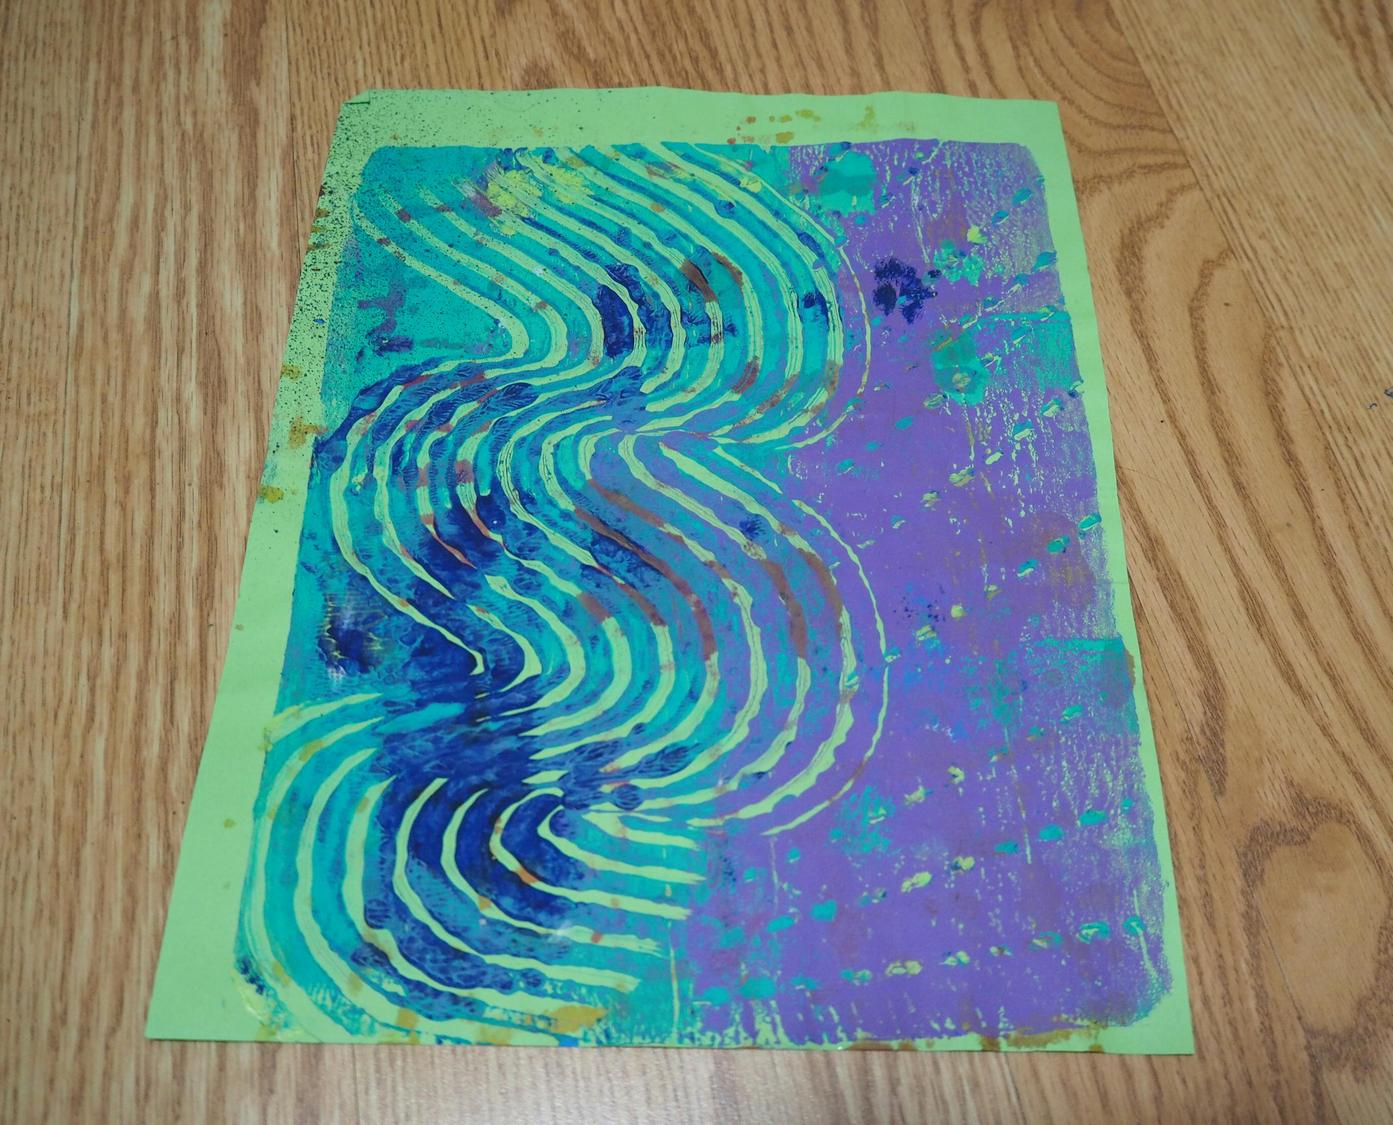 A Gelli plate printed sheet